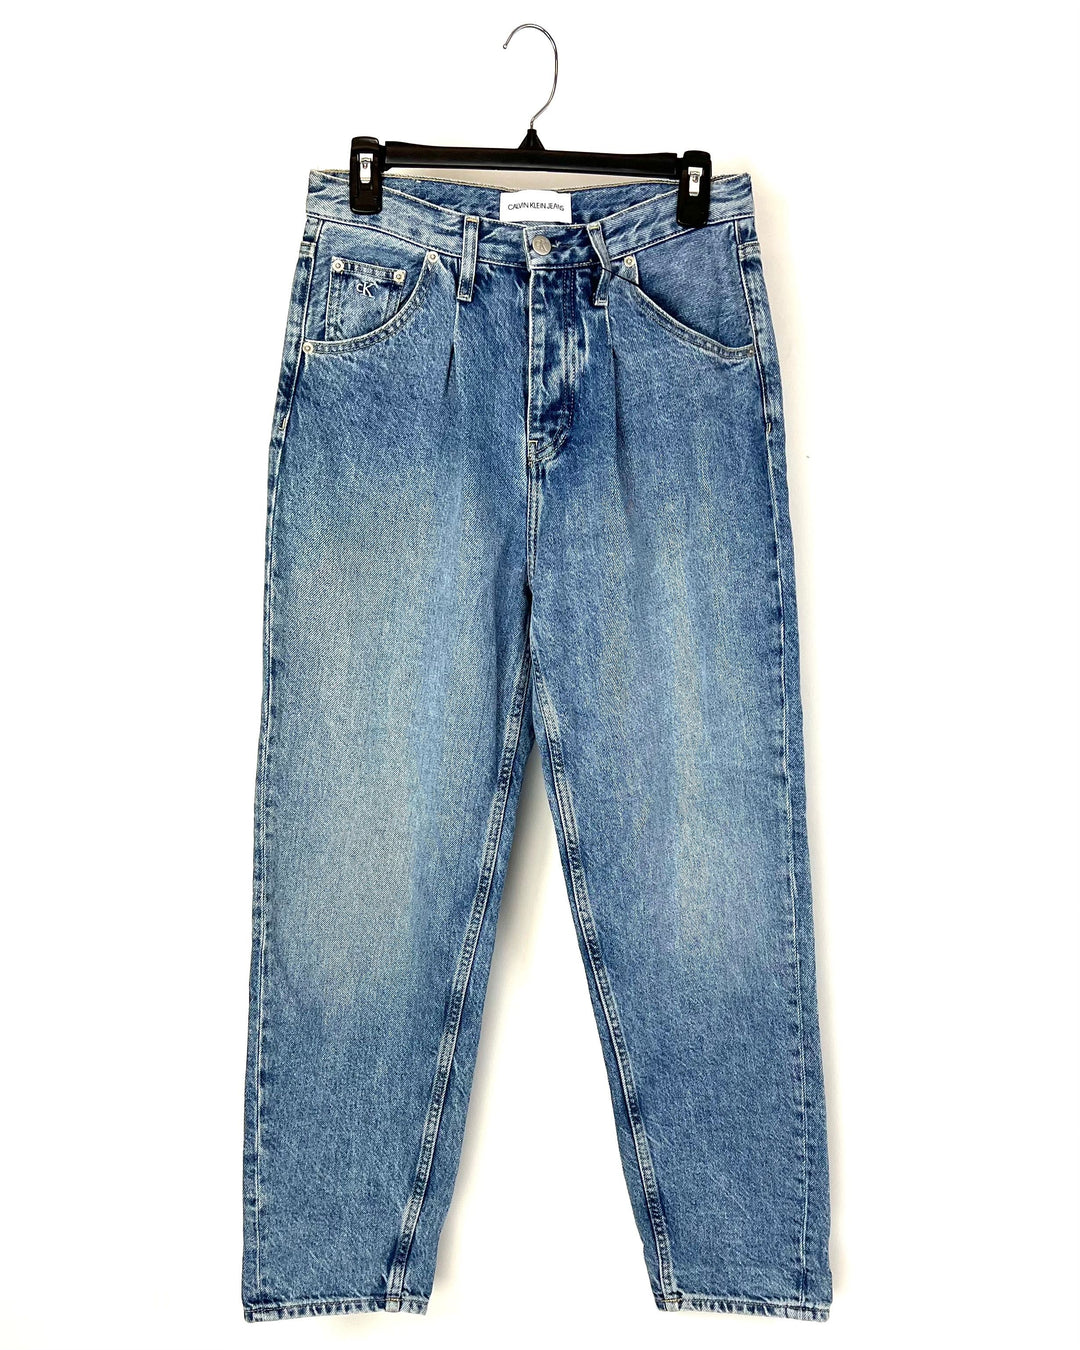 Baggy Medium Wash Jeans - Size 27